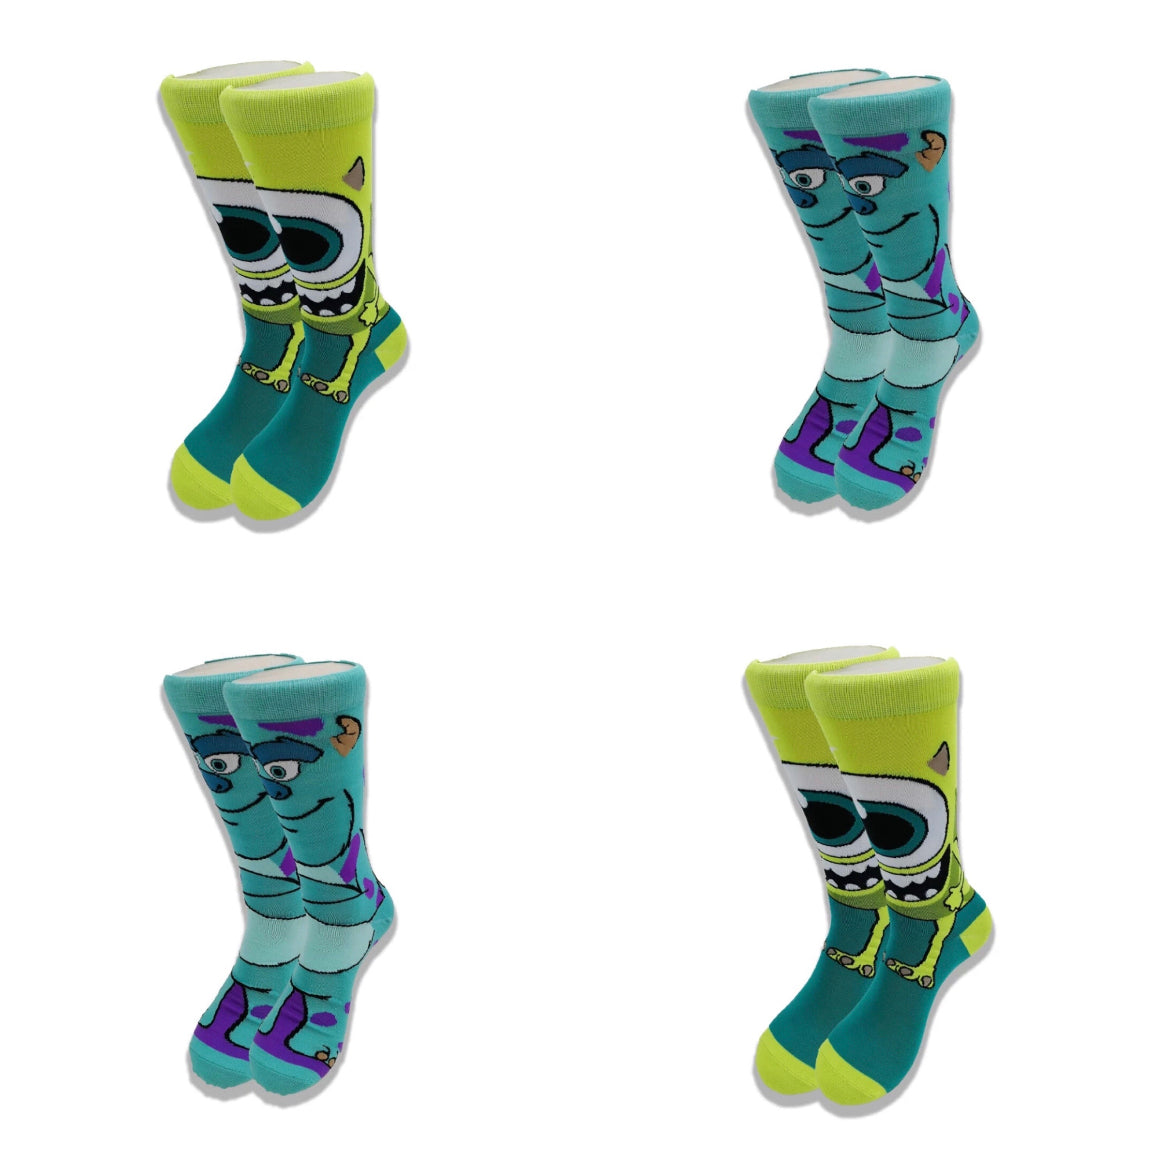 Monsters Inc Socks